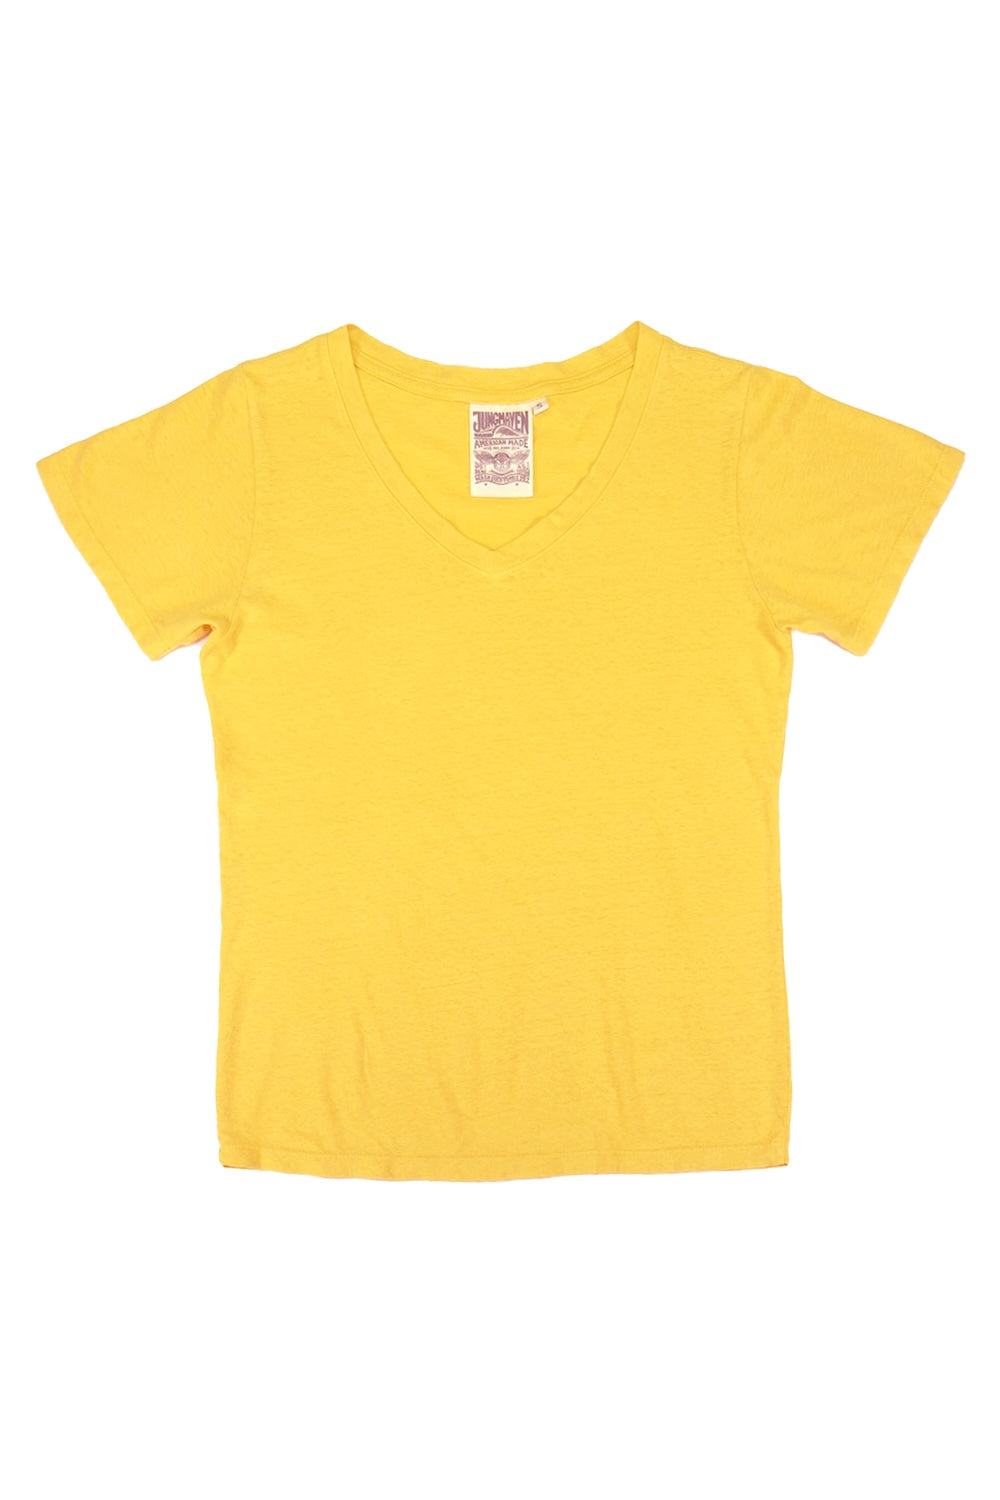 Paige V-neck | Jungmaven Hemp Clothing & Accessories / Color:Sunshine Yellow